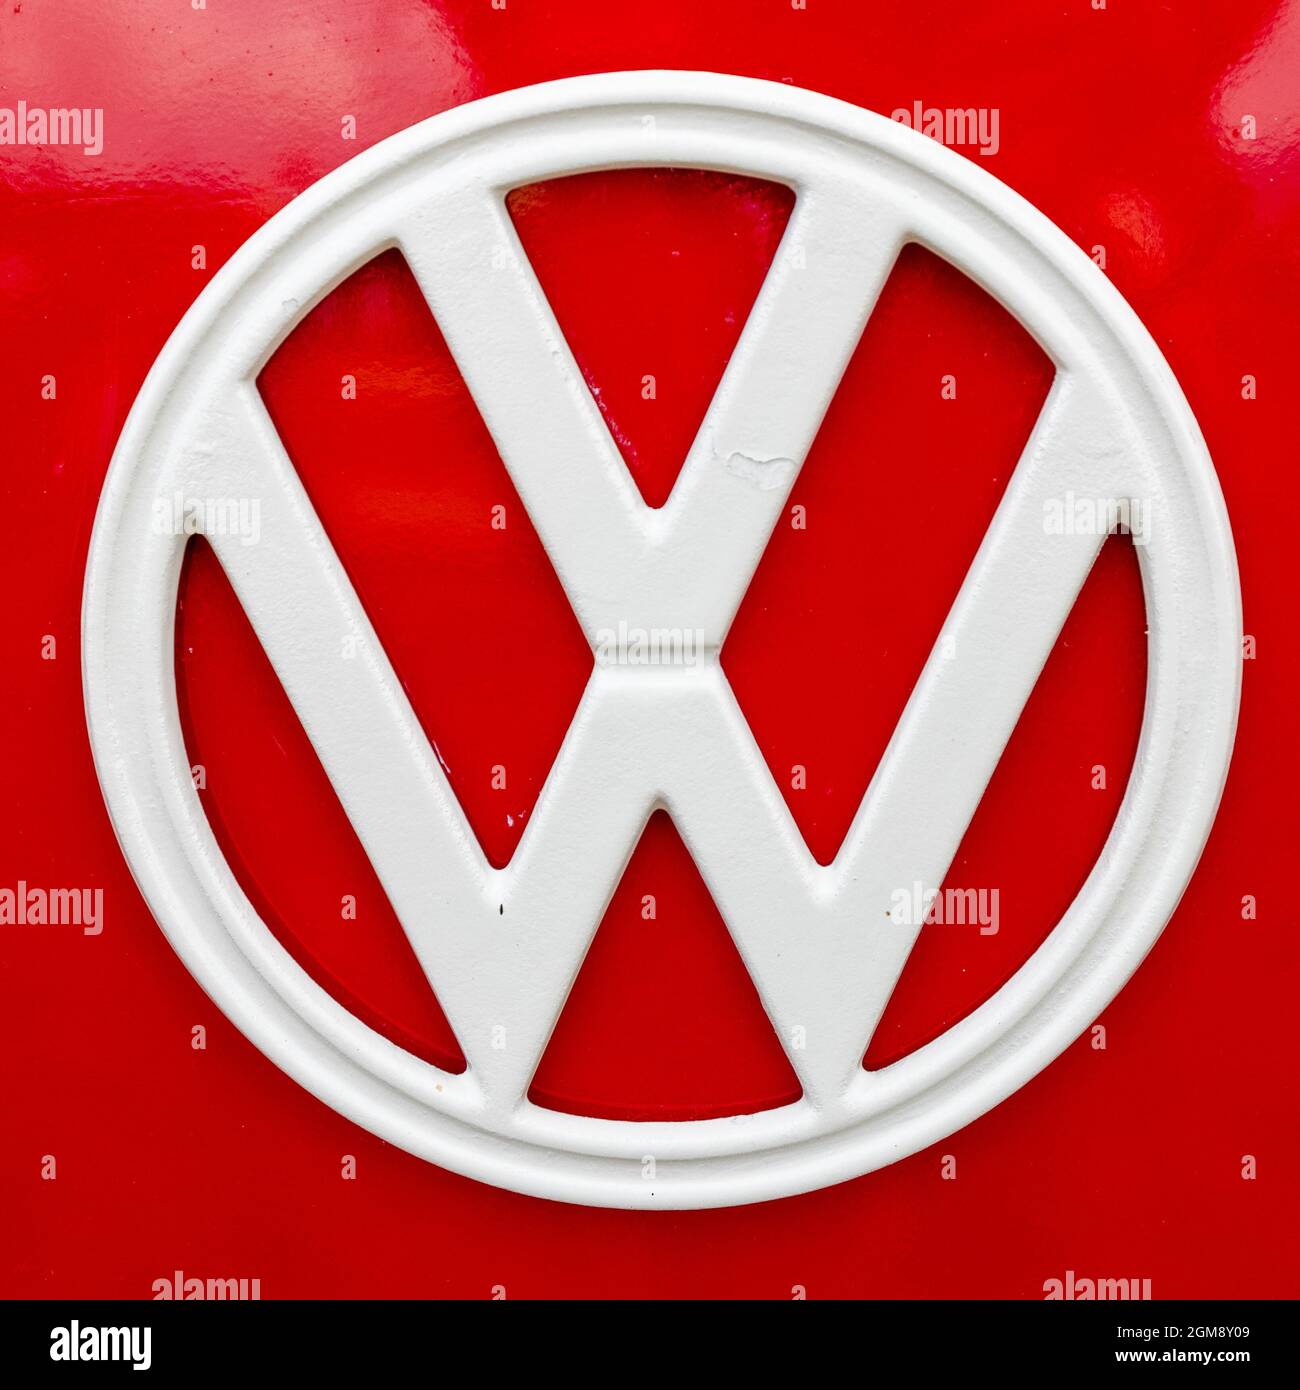 Volkswagen logo on a vintage Stock Photo - Alamy